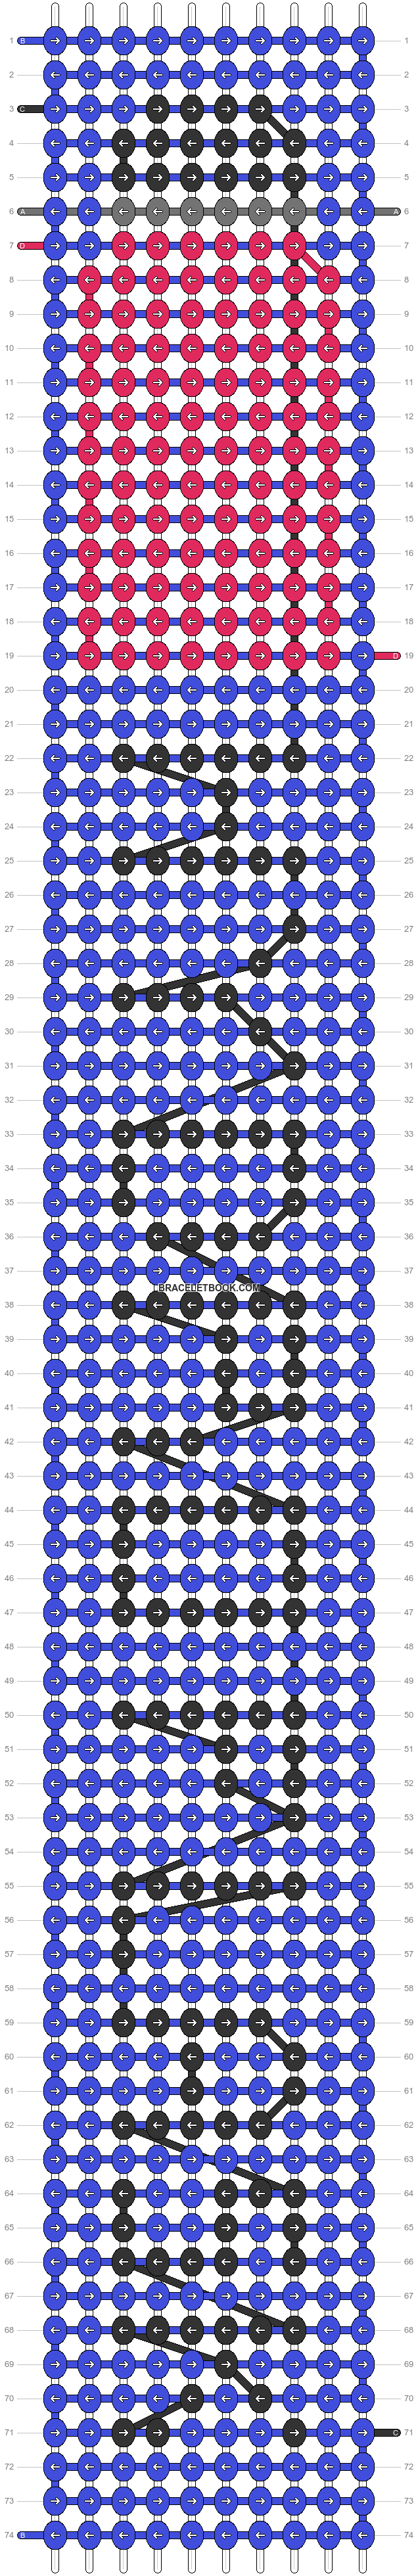 Alpha pattern #27828 variation #13372 pattern